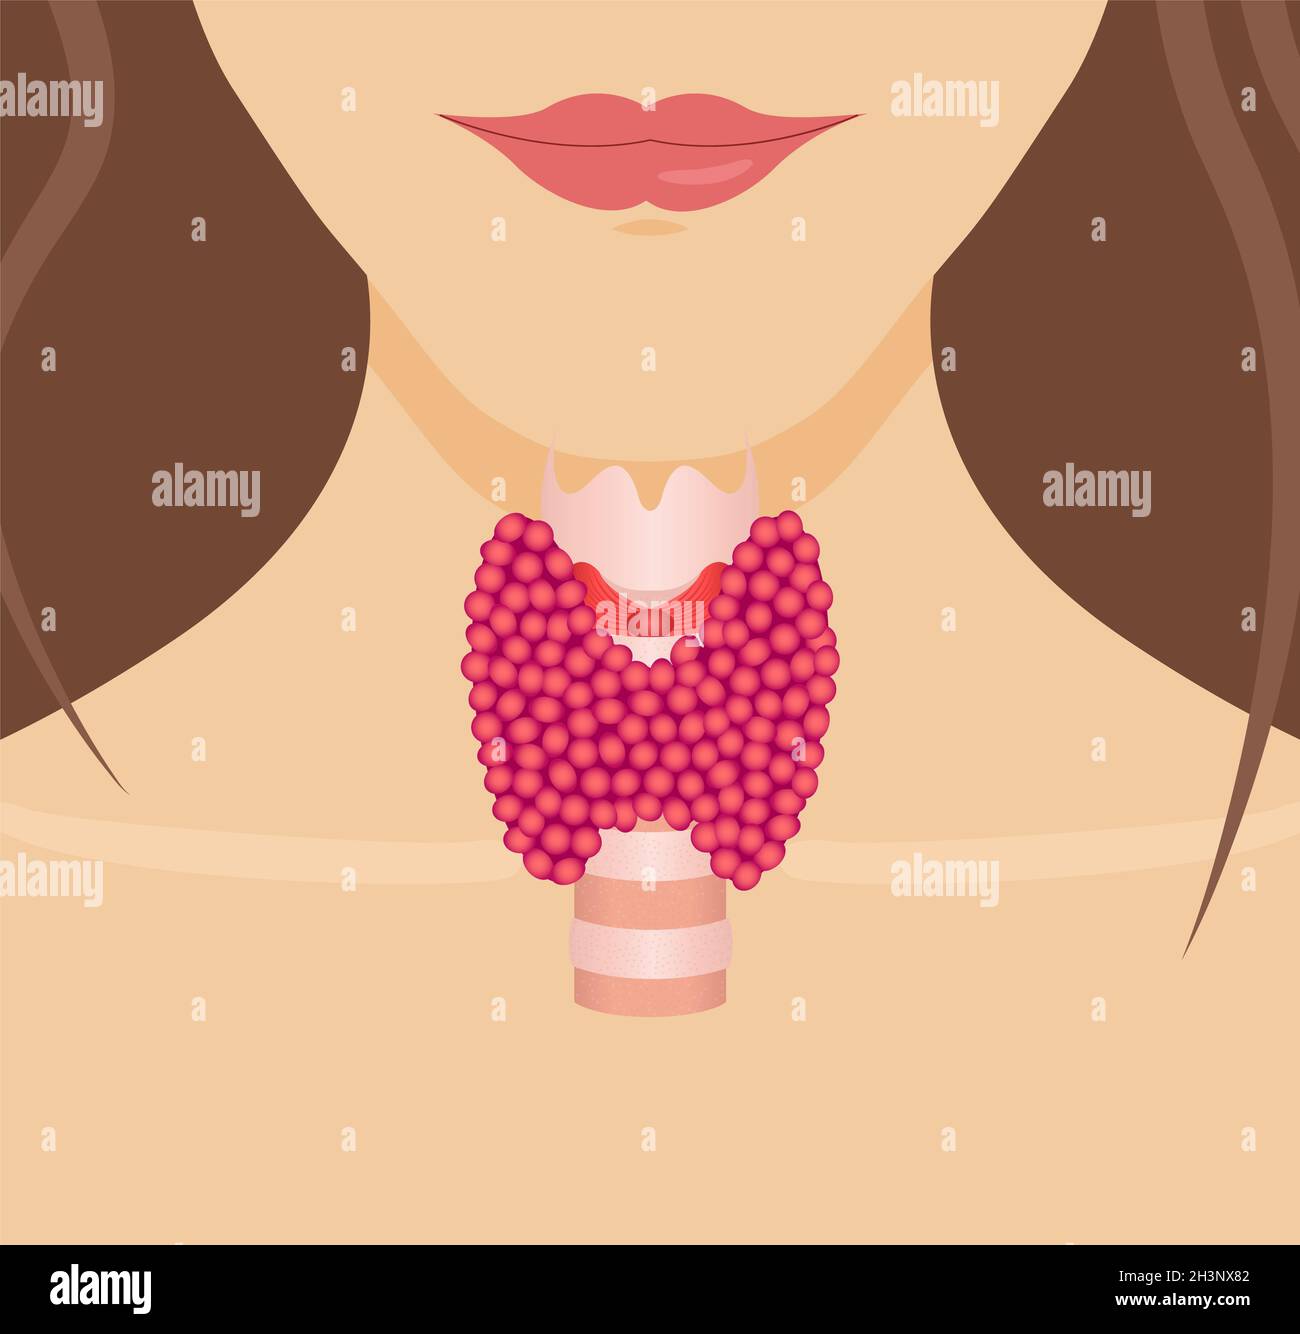 Thyroid gland, illustration Stock Photo